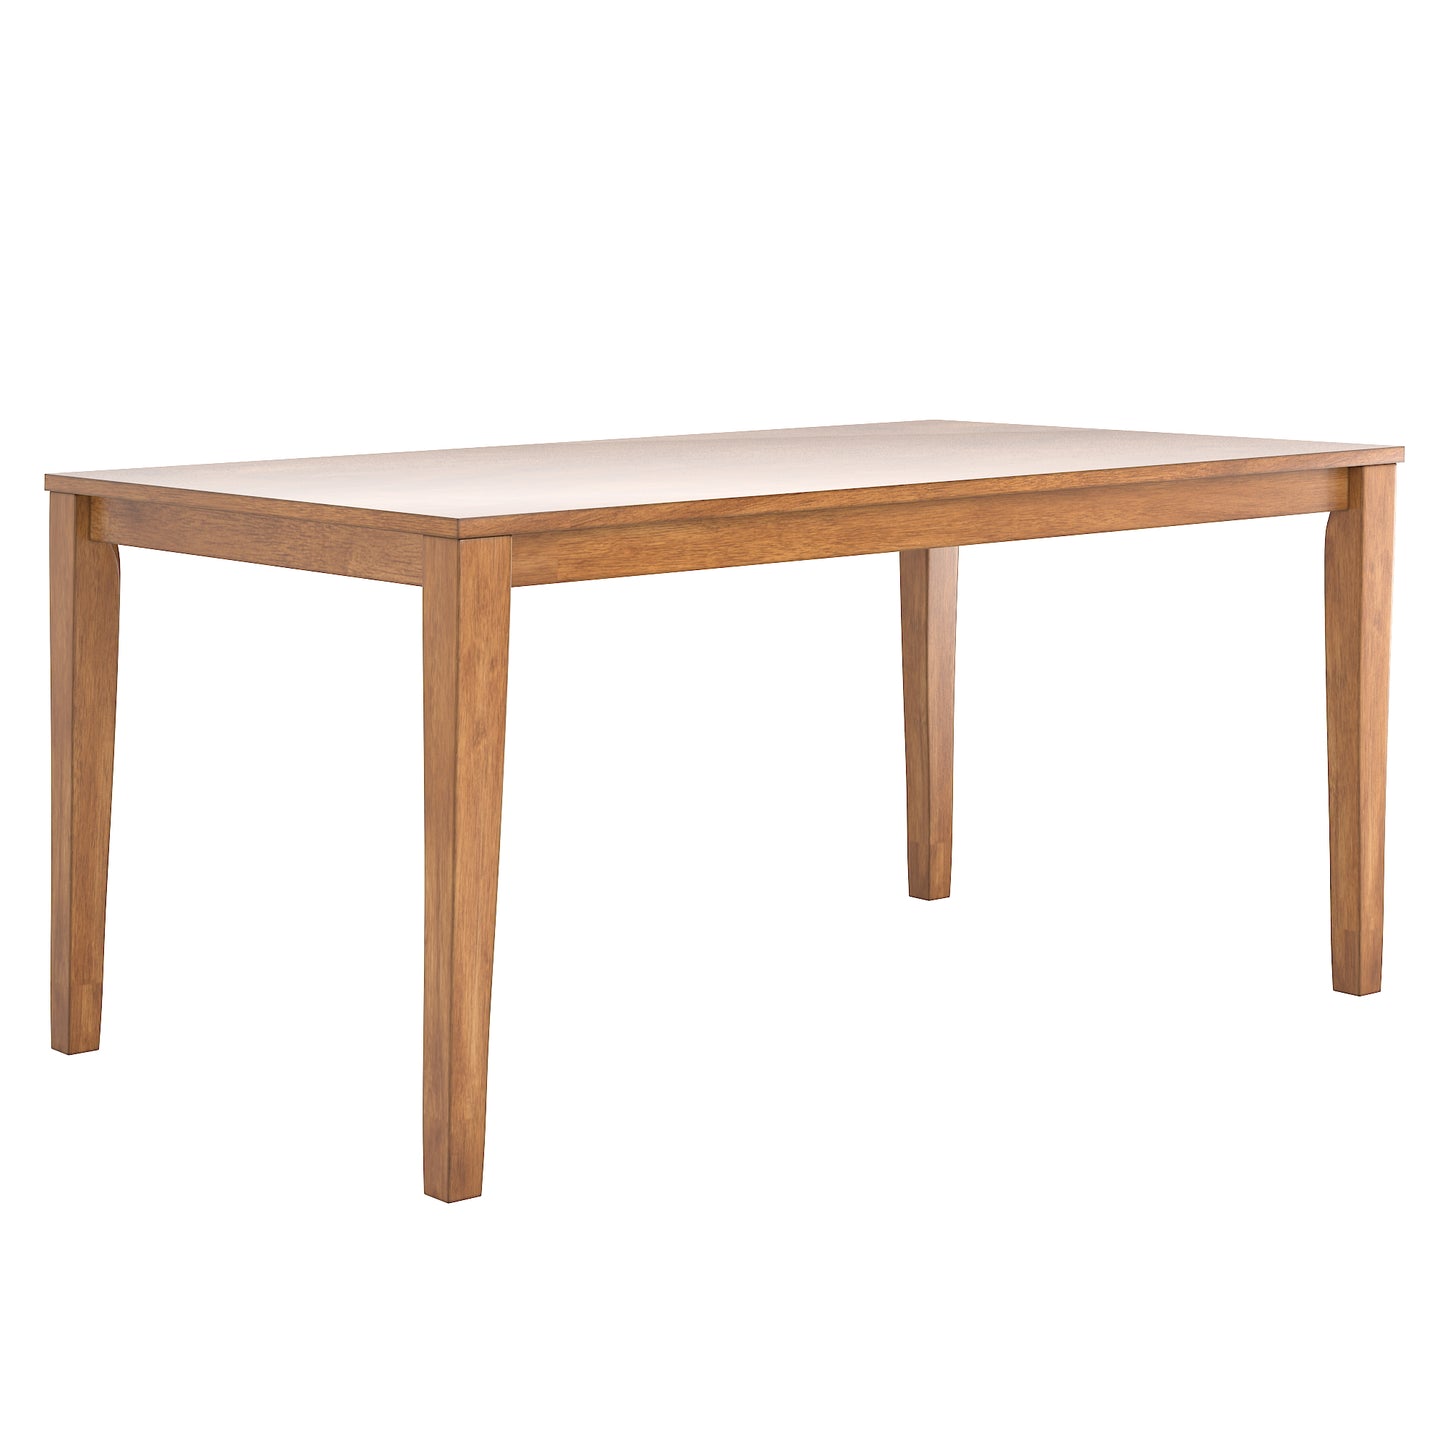 60-inch Rectangular Oak Finish Dining Set - Mission Back Chairs, 6-Piece Set